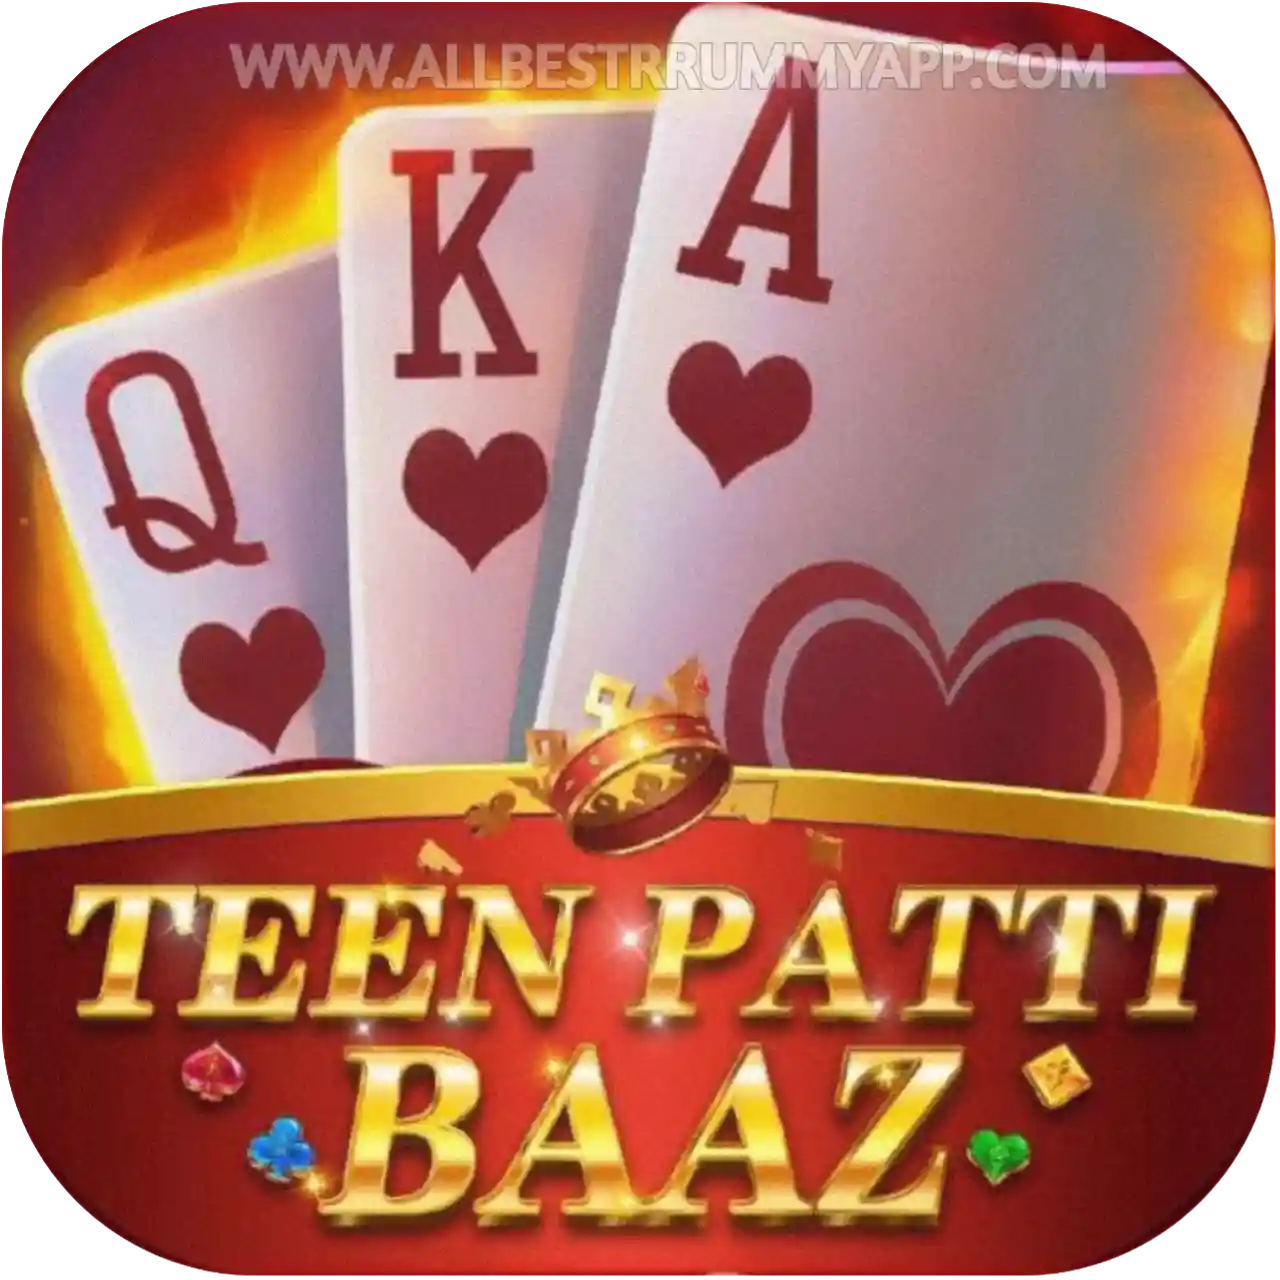 Teen Patti Baaz Logo - All Best Rummy App